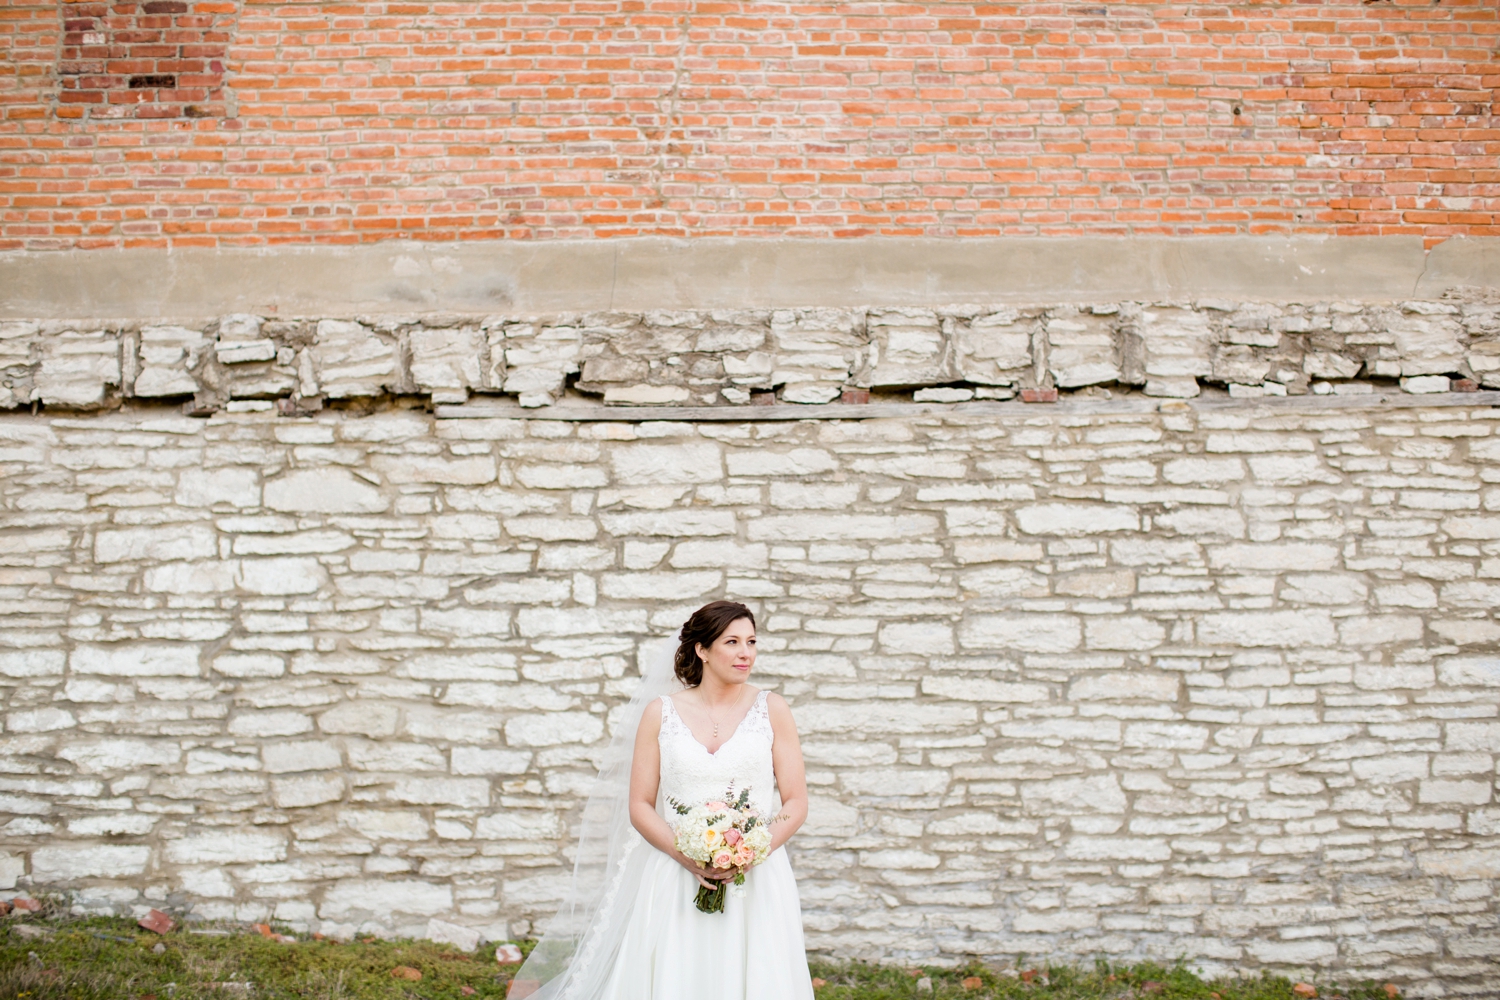 Windows on Washington, Classic St. Louis Wedding, Navy and Blush Wedding, Jessica Lauren Photography